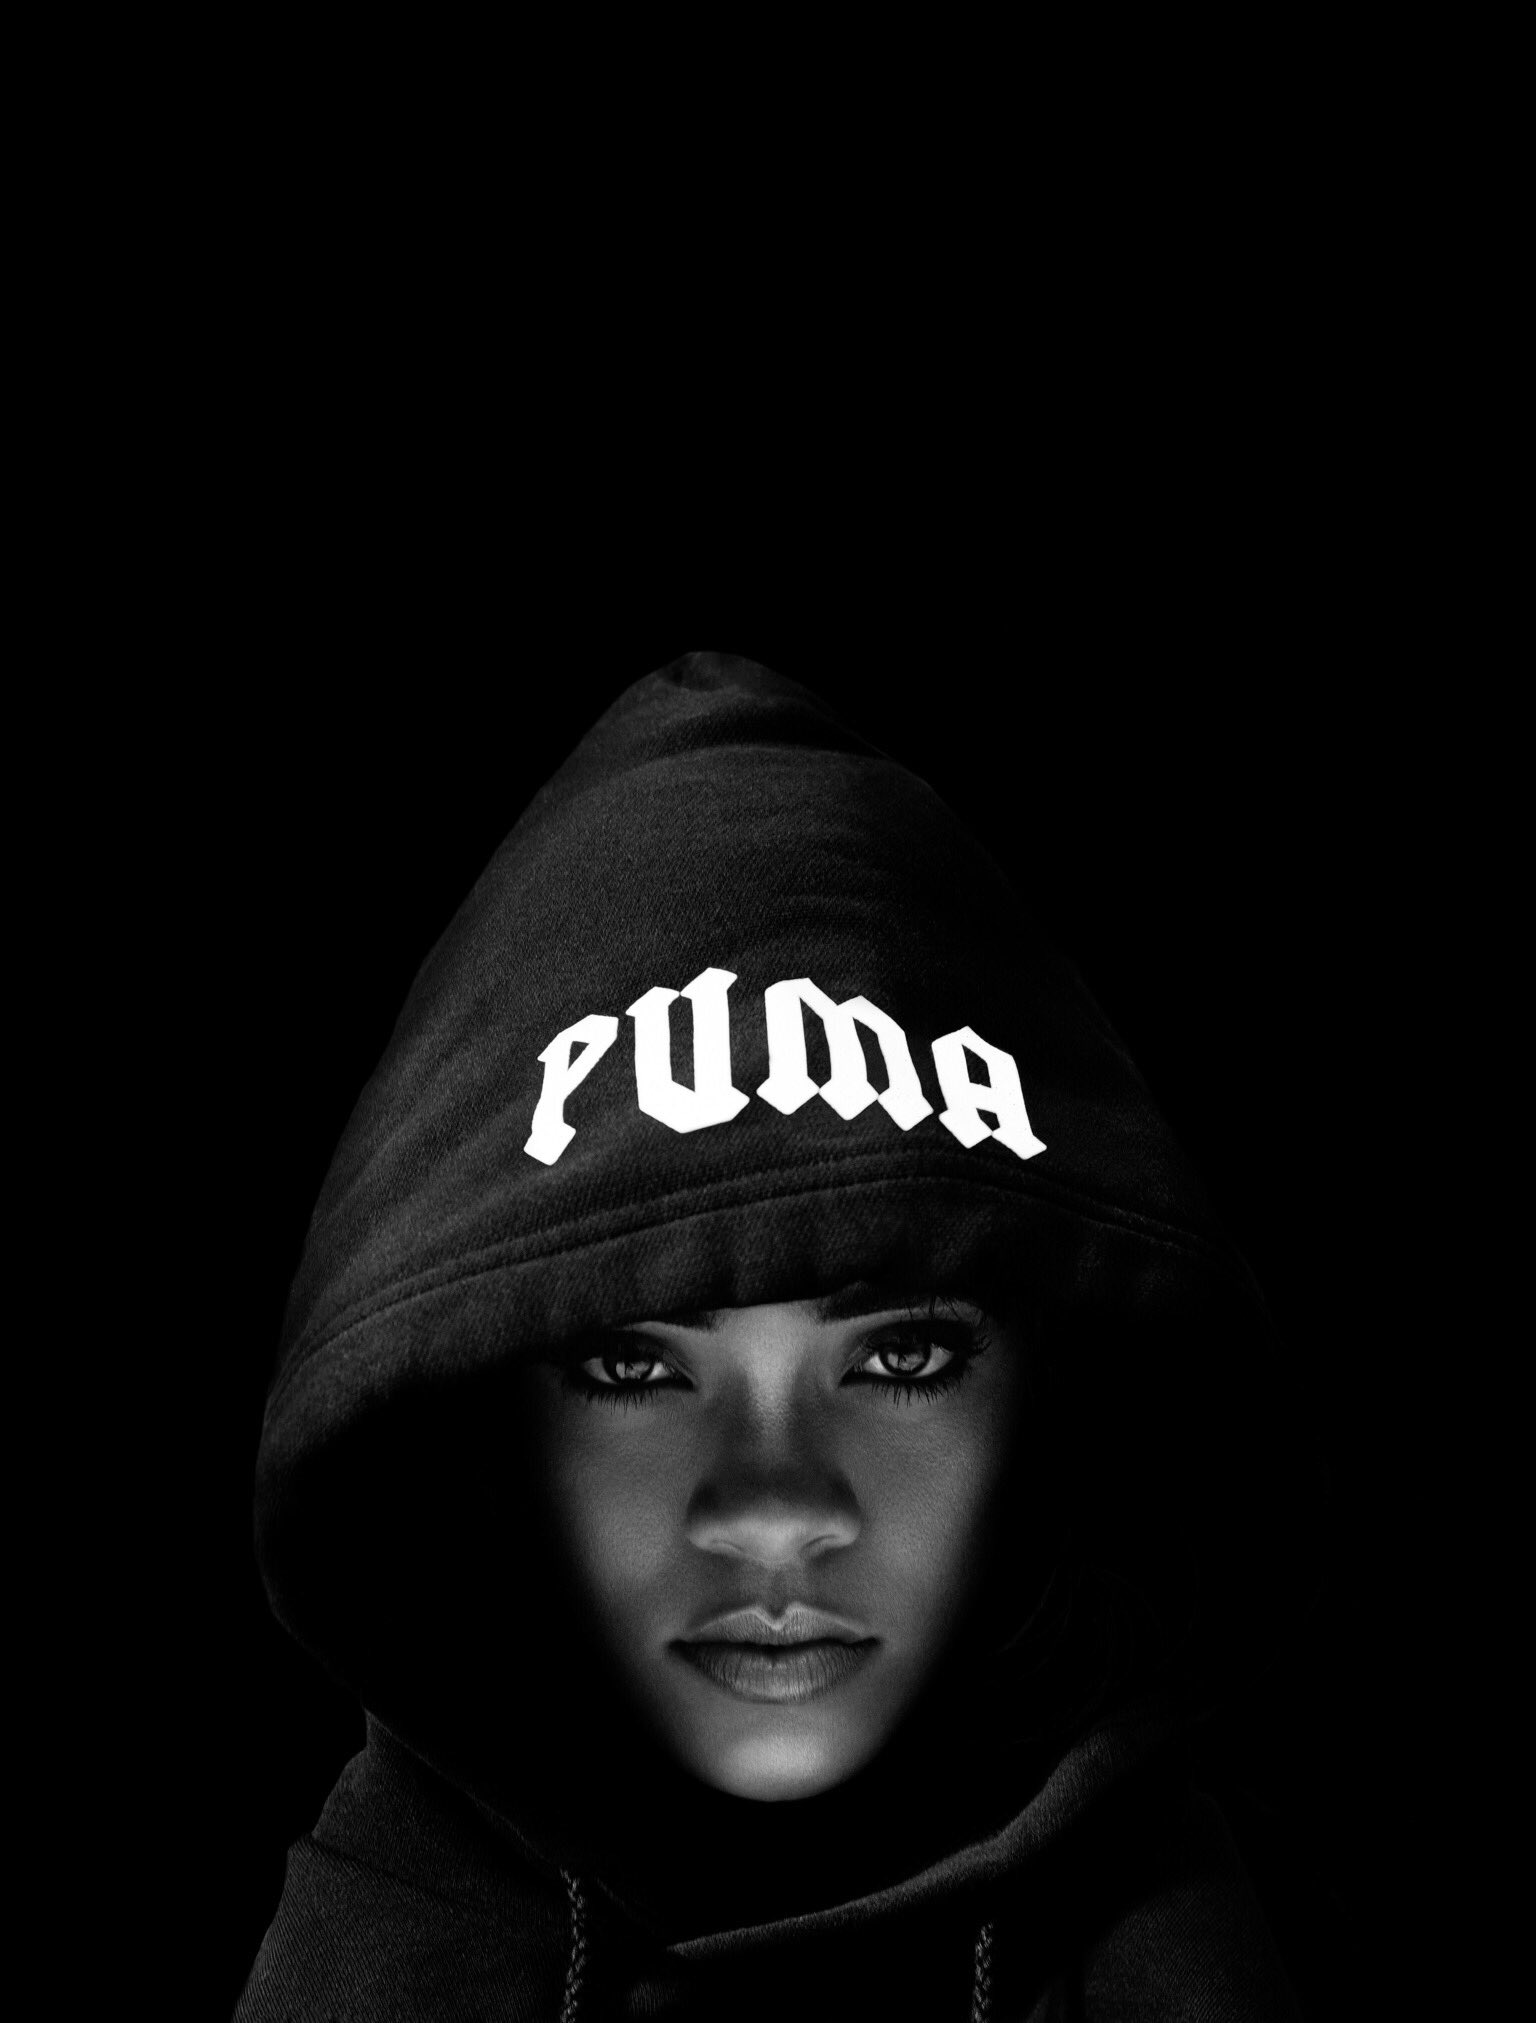 Fenty Headlines Twitter: "Rihanna x Puma ✨ https://t.co/B6gZ5bE3iY" / Twitter